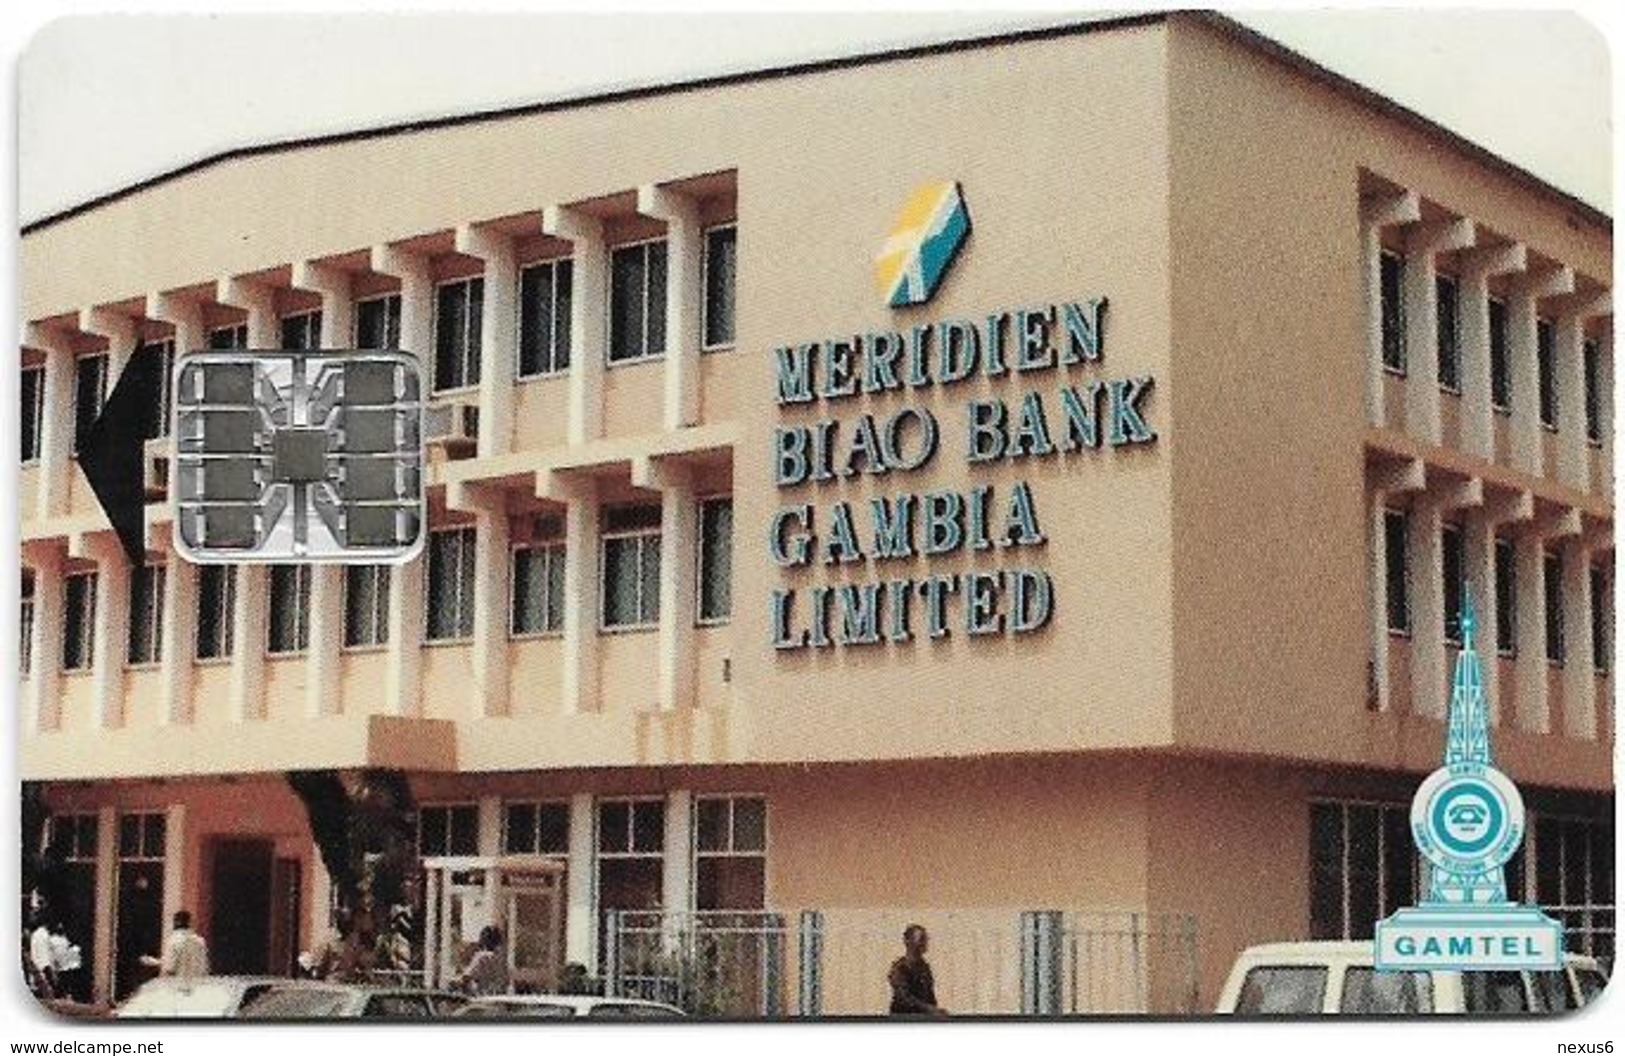 Gambia - Gamtel - Meridien Biao Bank (Small Cn. C4C), SC7, 60Units, Used - Gambie